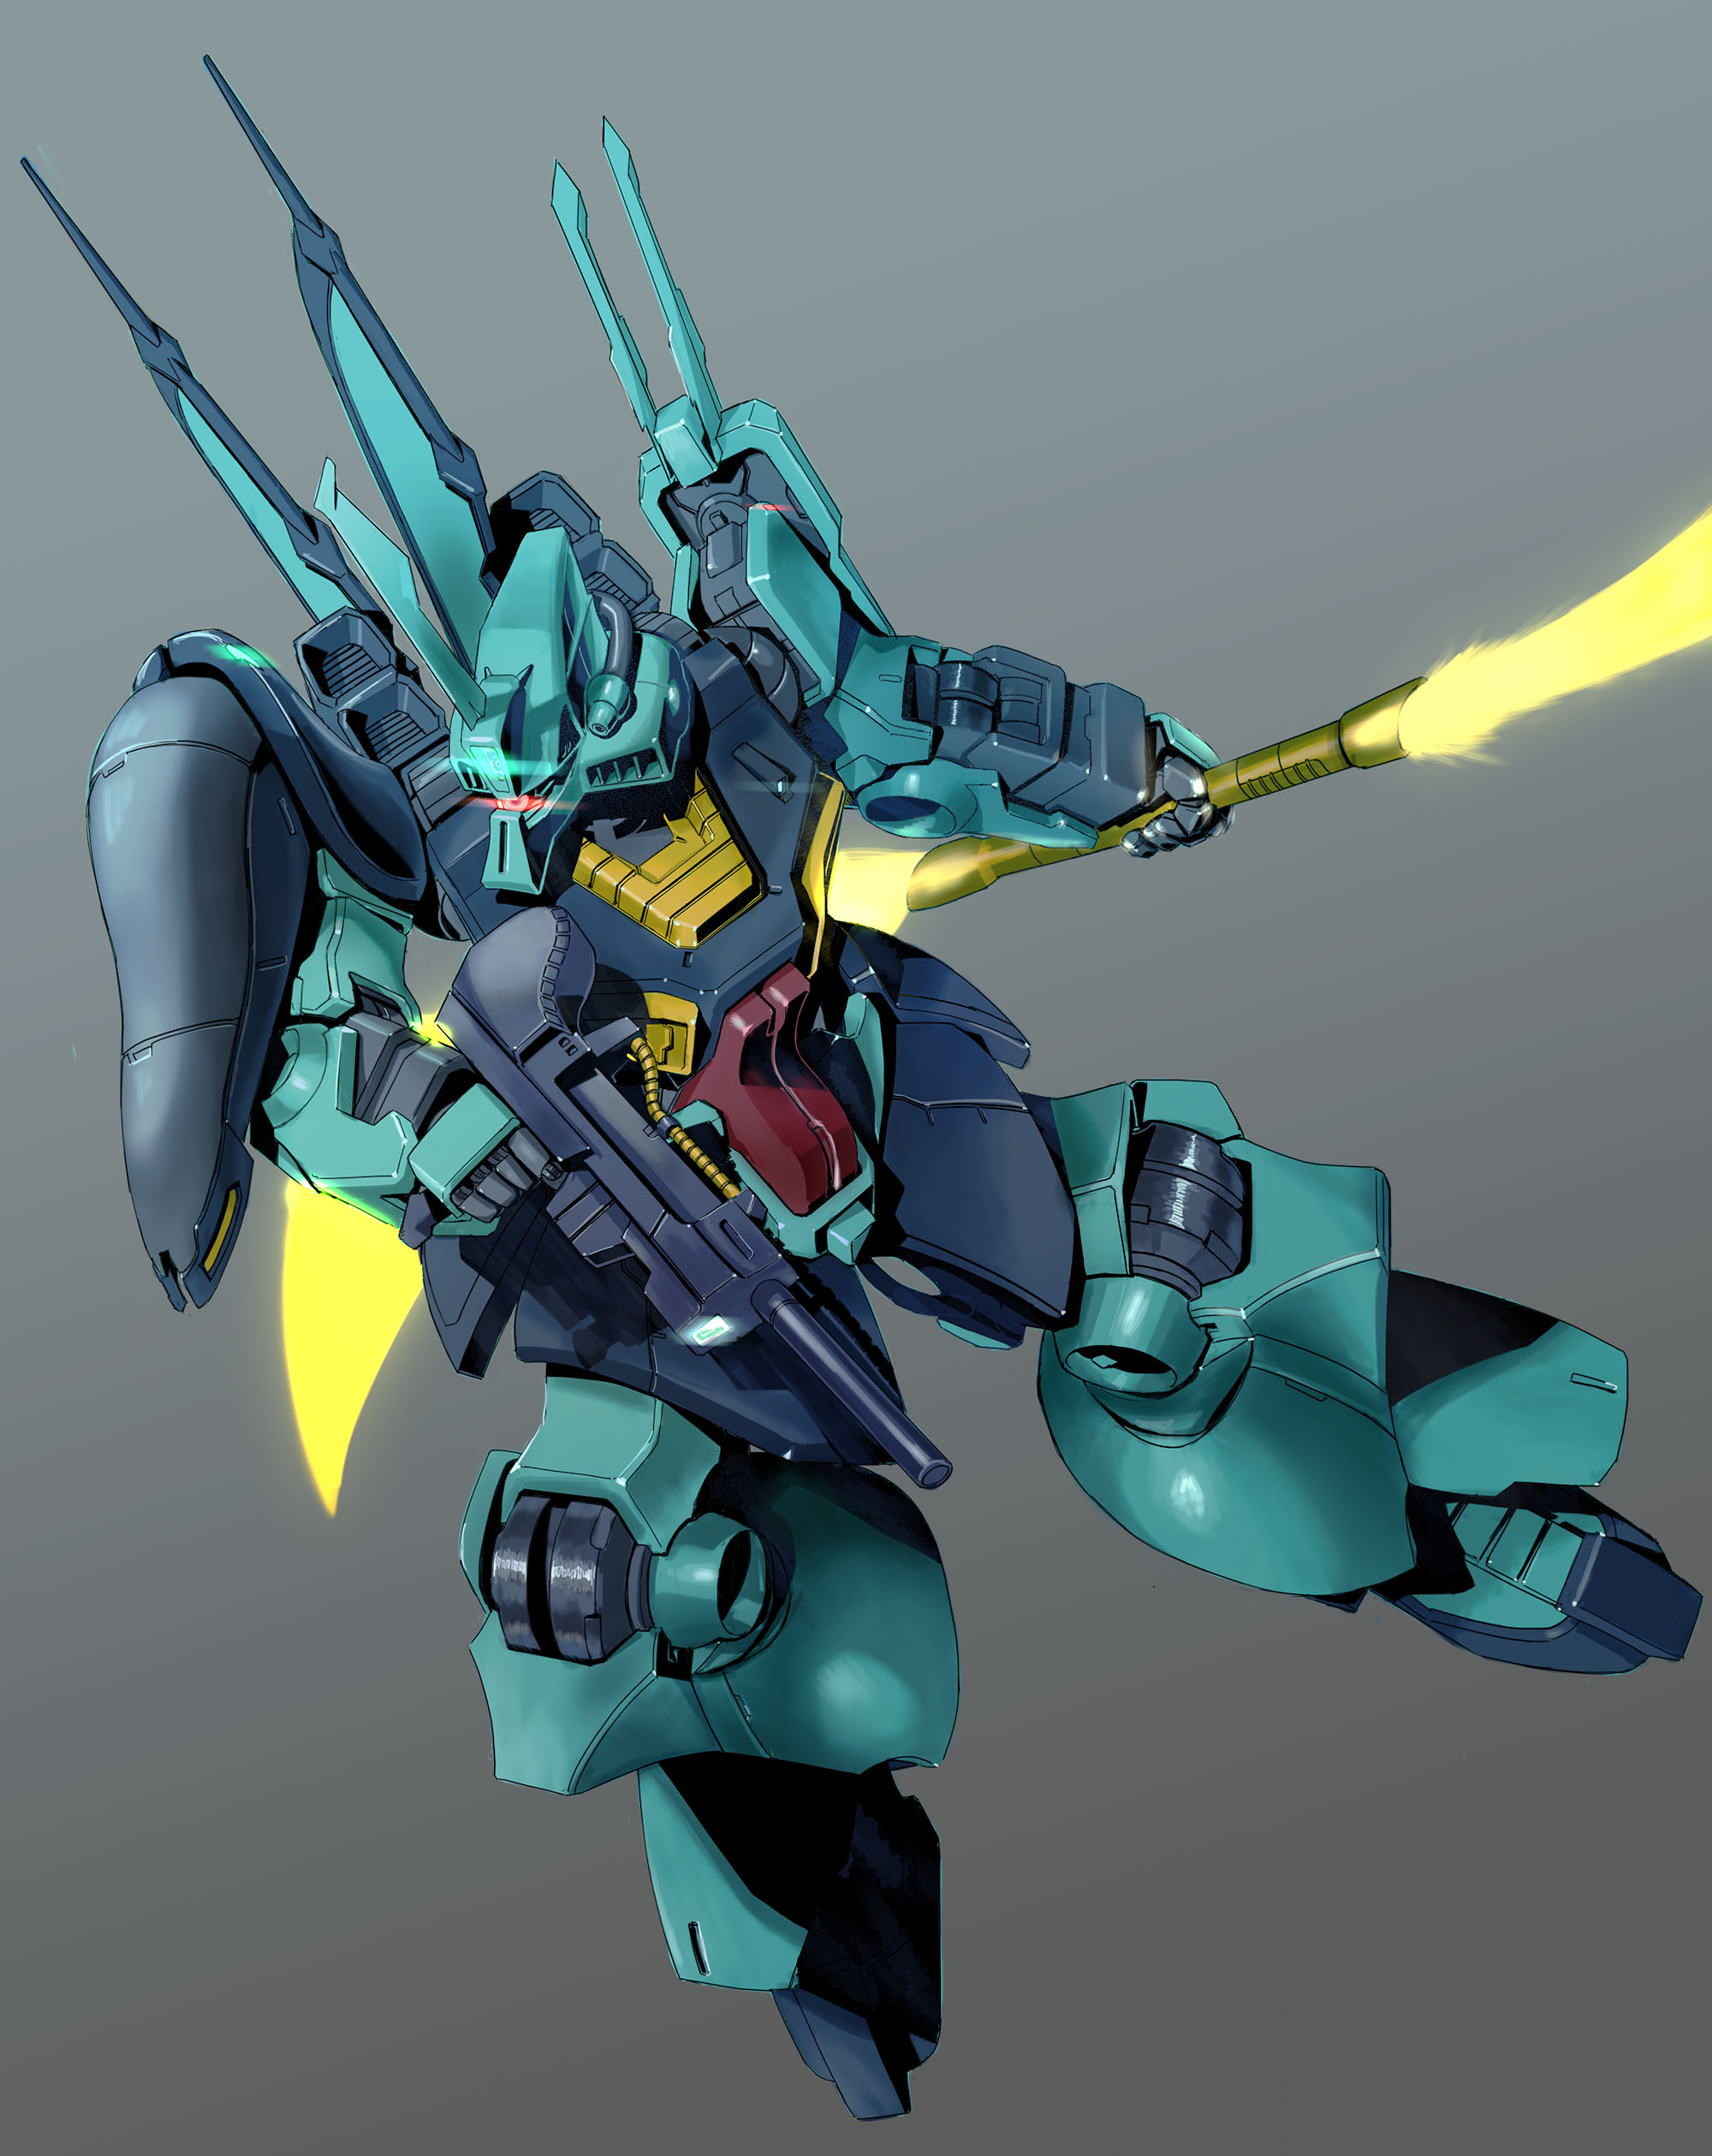 Dijeh Mobile Suit Mobile Suit Zeta Gundam Anime Mechs Super Robot Taisen Artwork Digital Art Fan Art 2000x2518